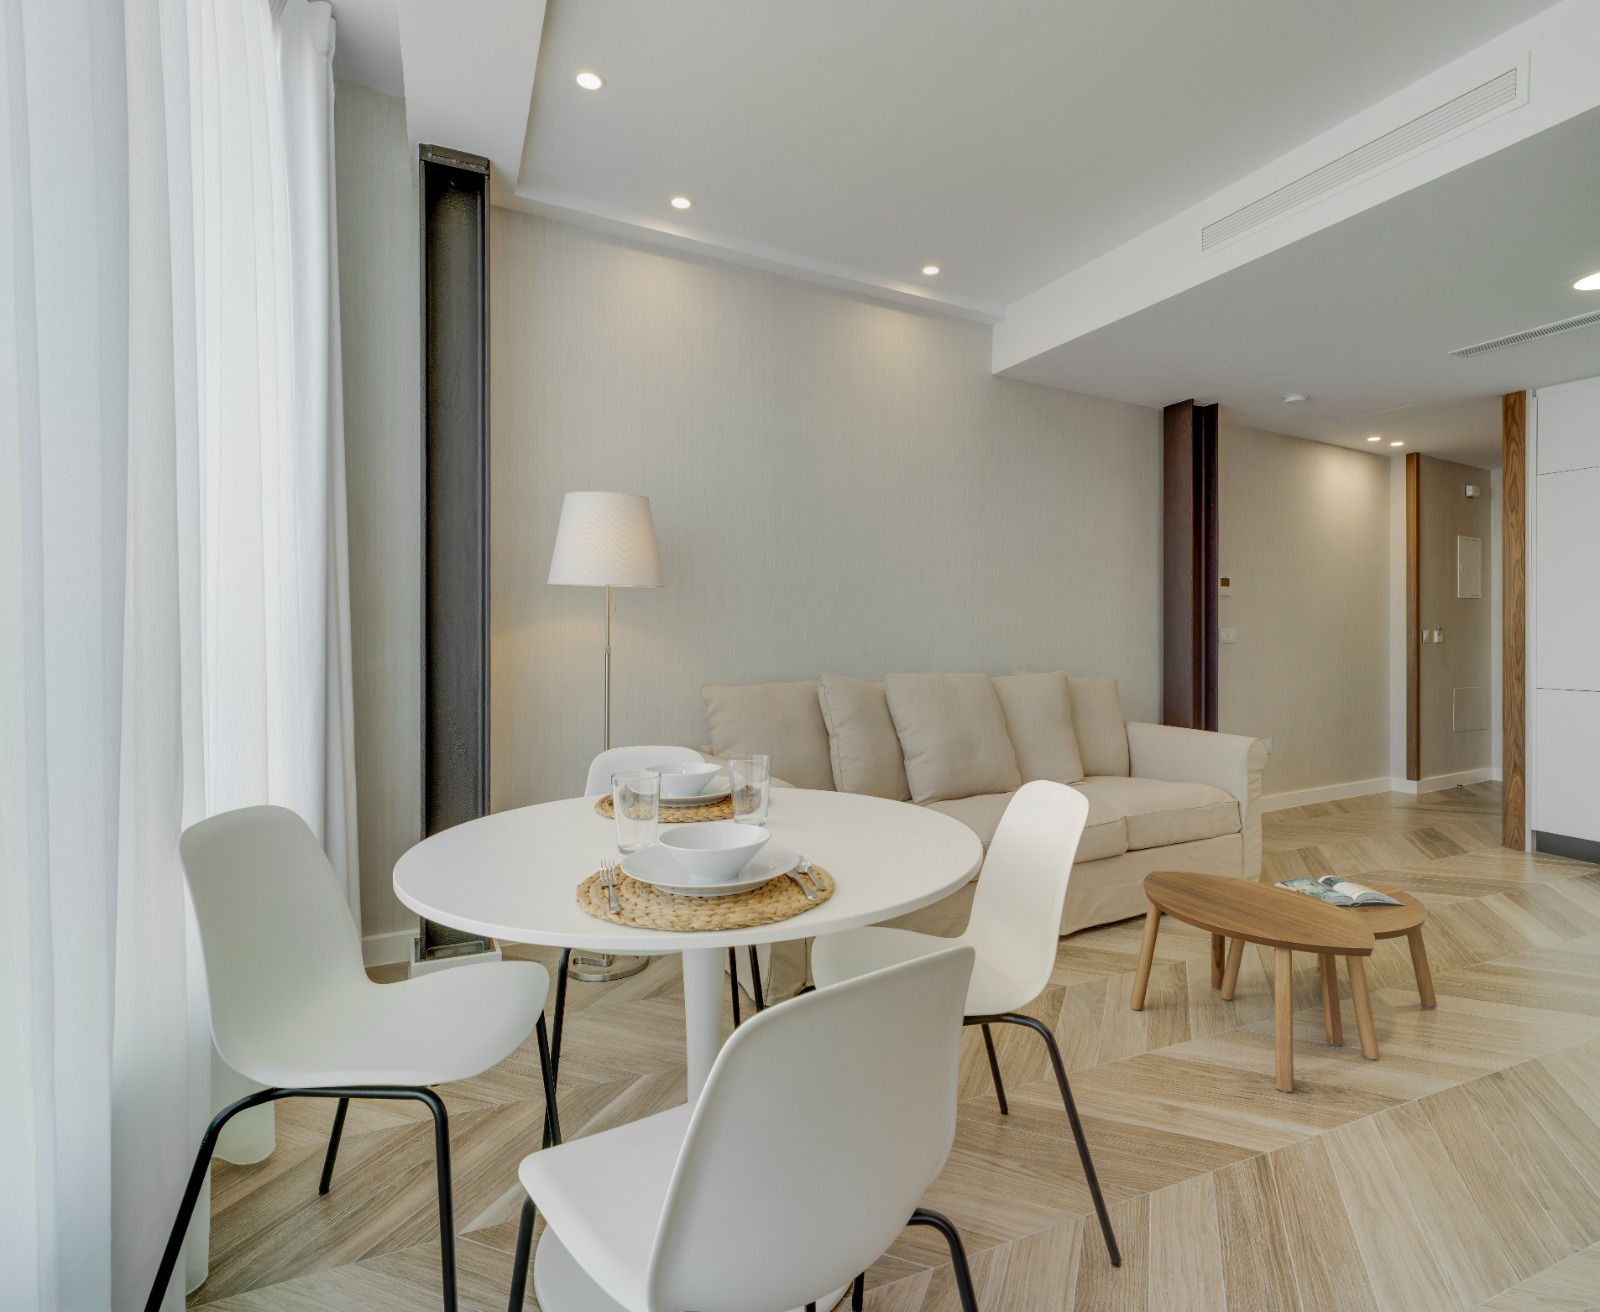 Sebastian 4 - Exclusive flat for rent in Cartagena